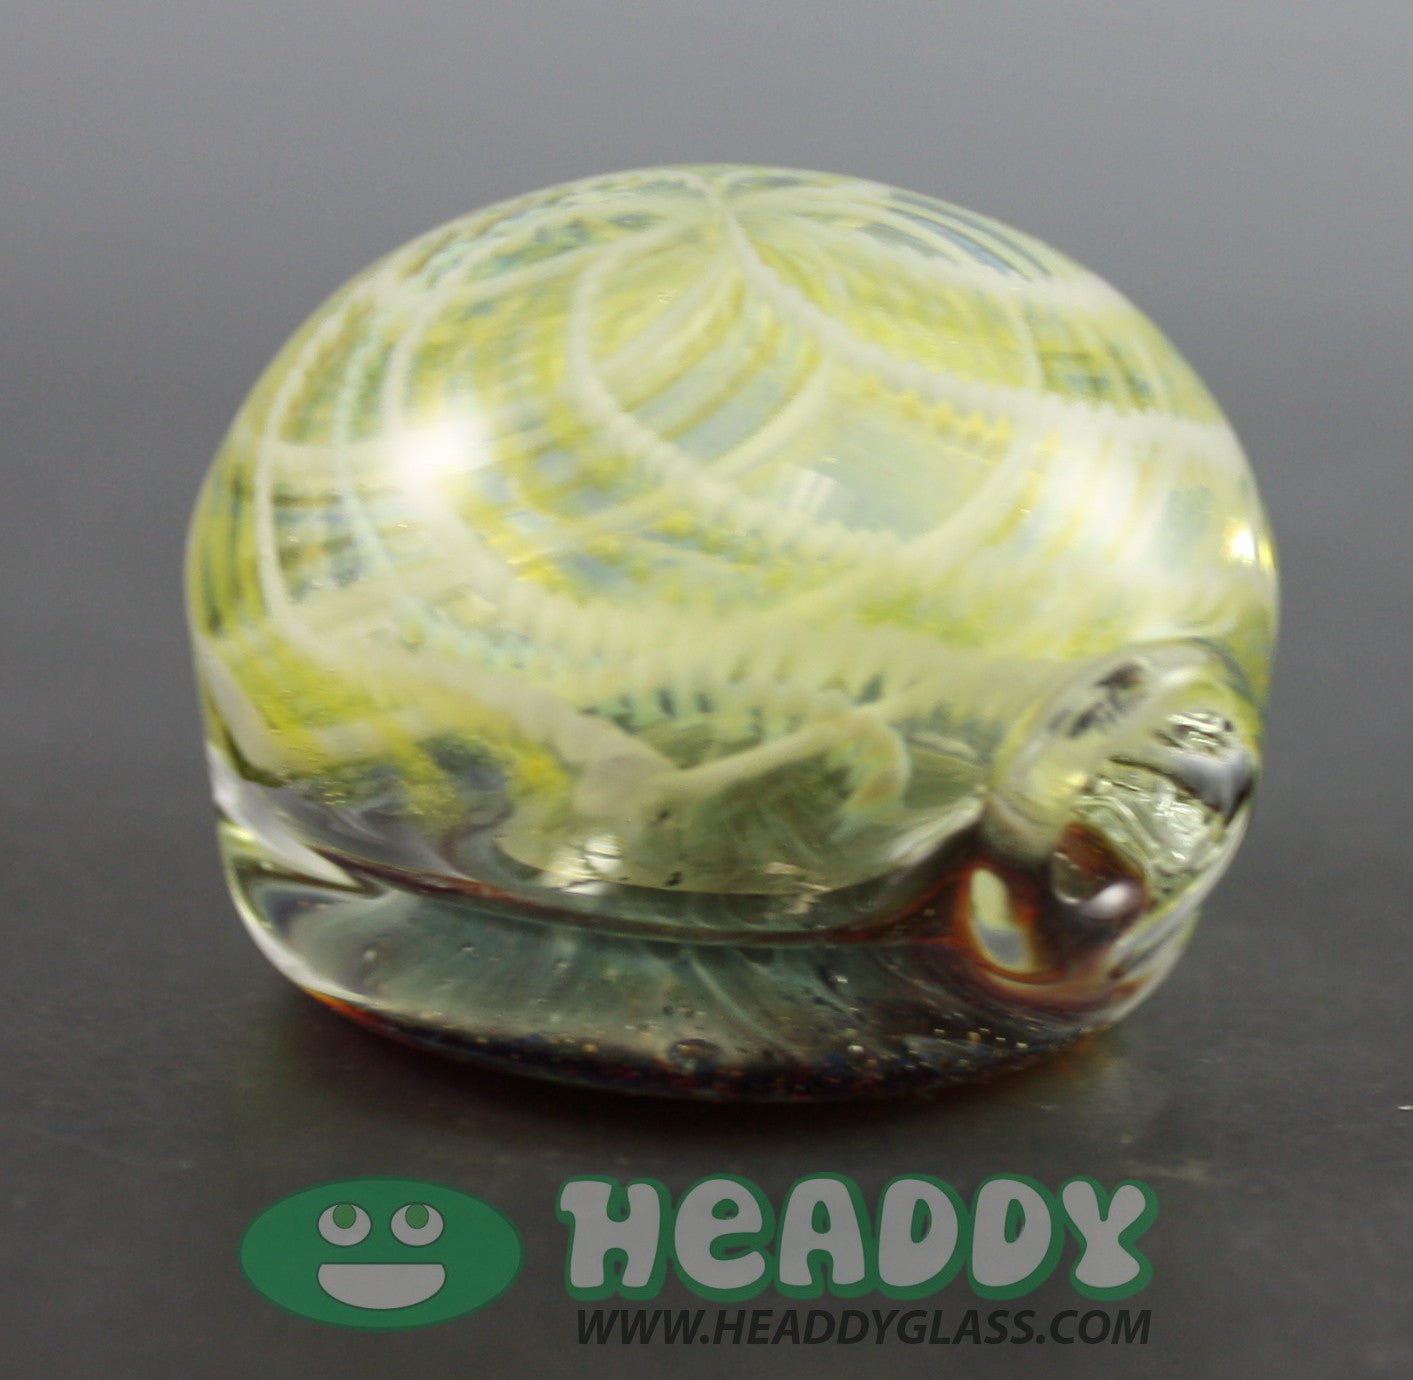 Koichi Yajima uv hollow pendant - Headdy Glass - HG